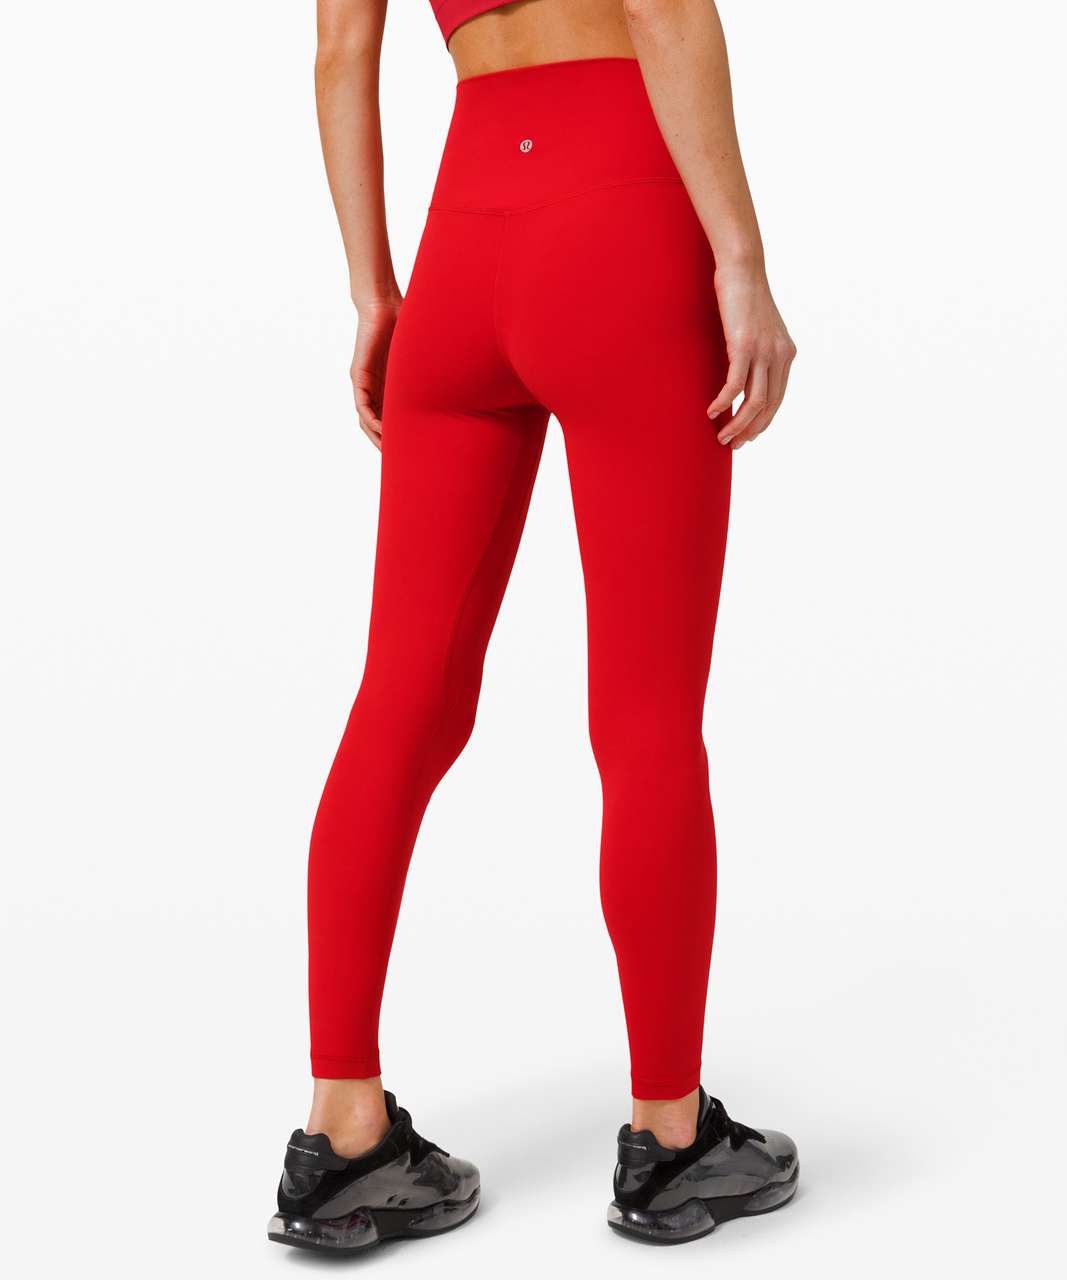 lululemon red align pants